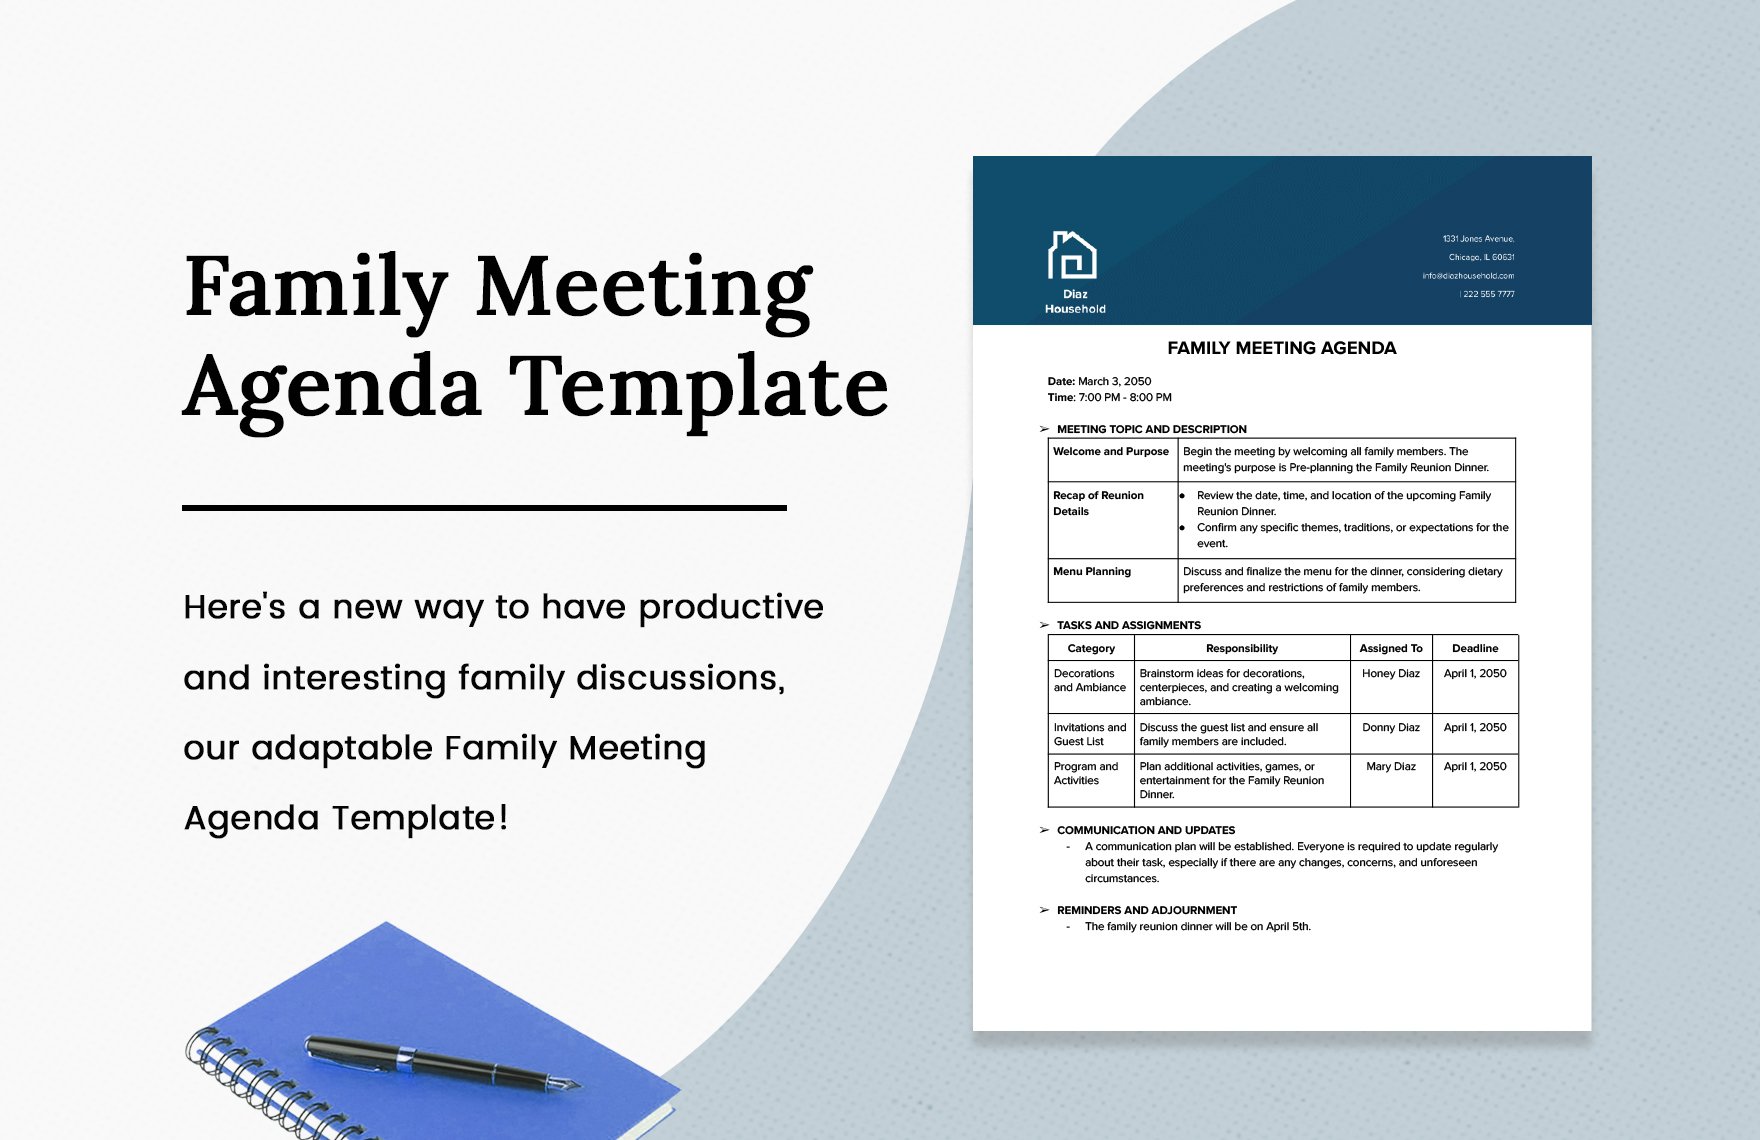 Family Meeting Agenda Template